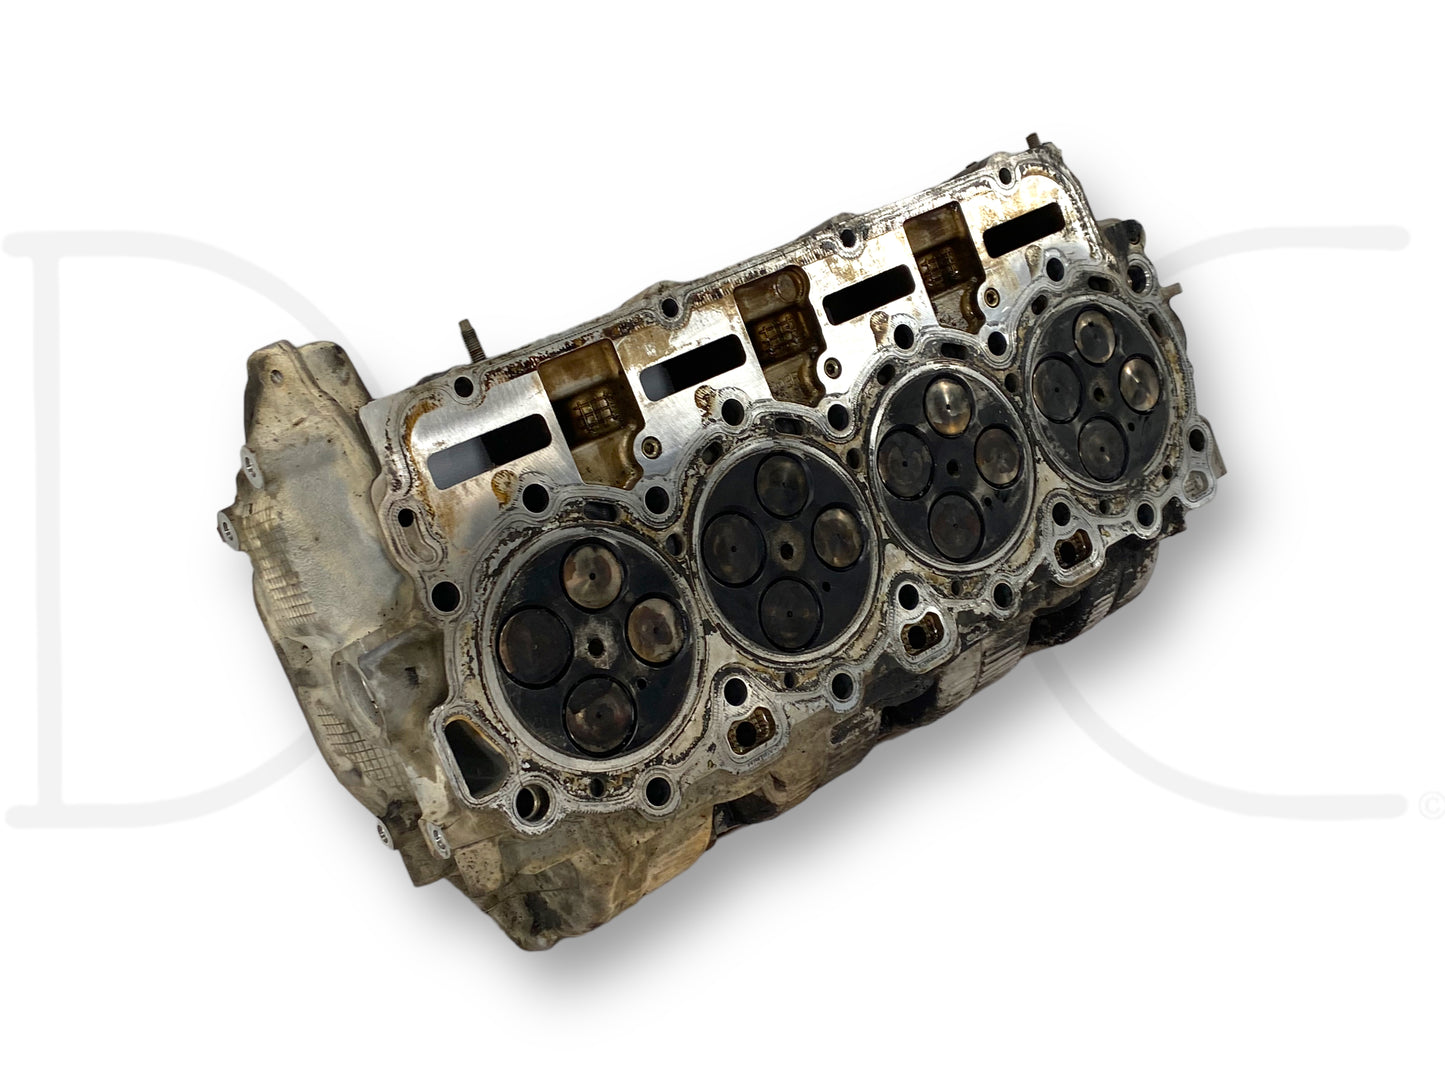 2011 Ford 6.7 6.7L Powerstroke Diesel RH Right Cylinder Head Bc3Q-6090-Ca